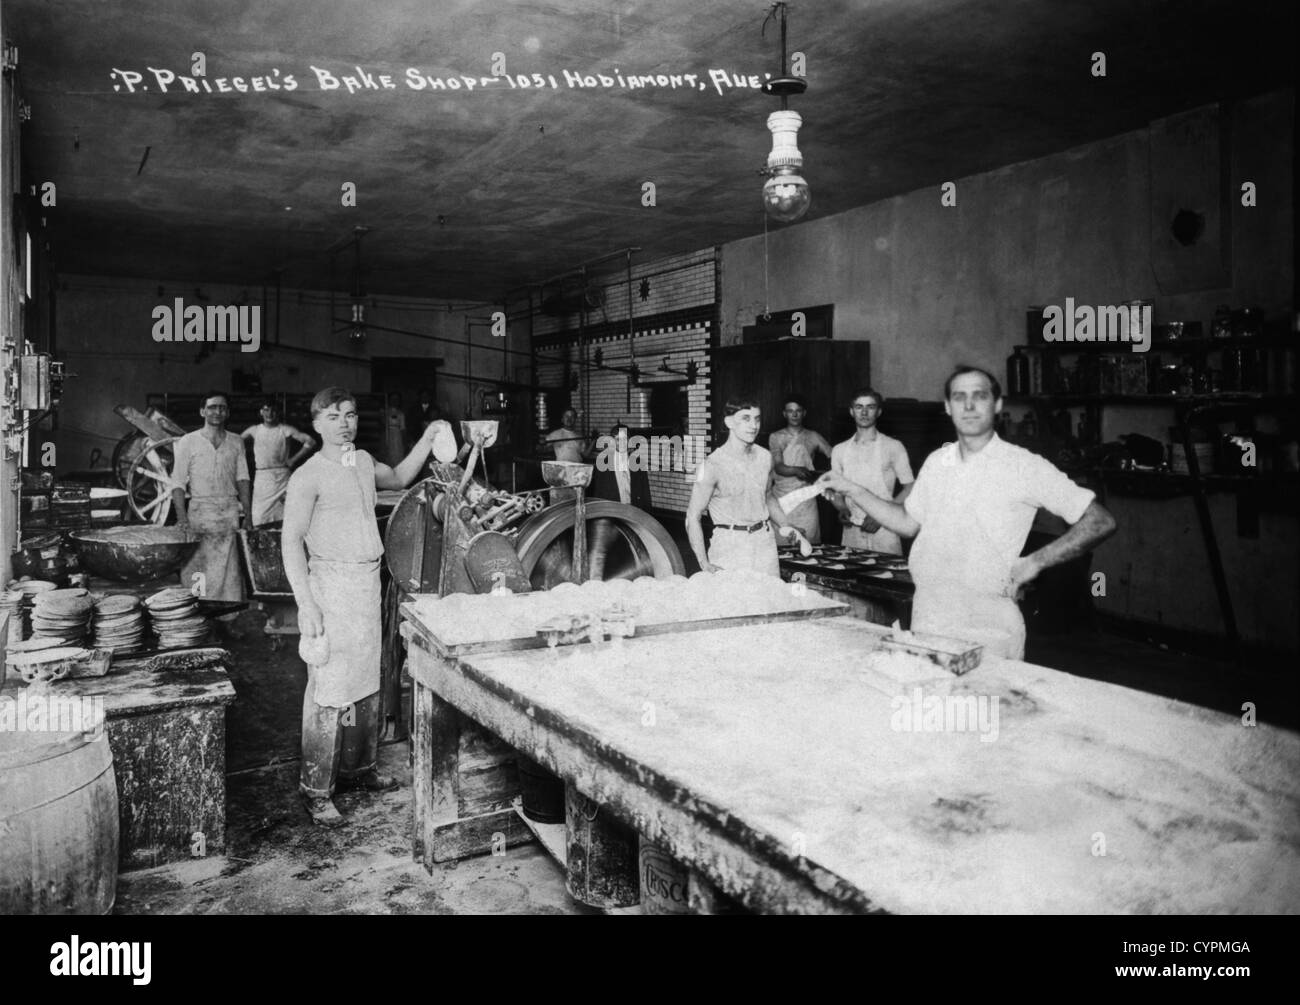 Bakery Workers, P. Priegel&#39;s Bake Shop, St. Louis Missouri, USA, 1915 Stock Photo: 51515530 - Alamy